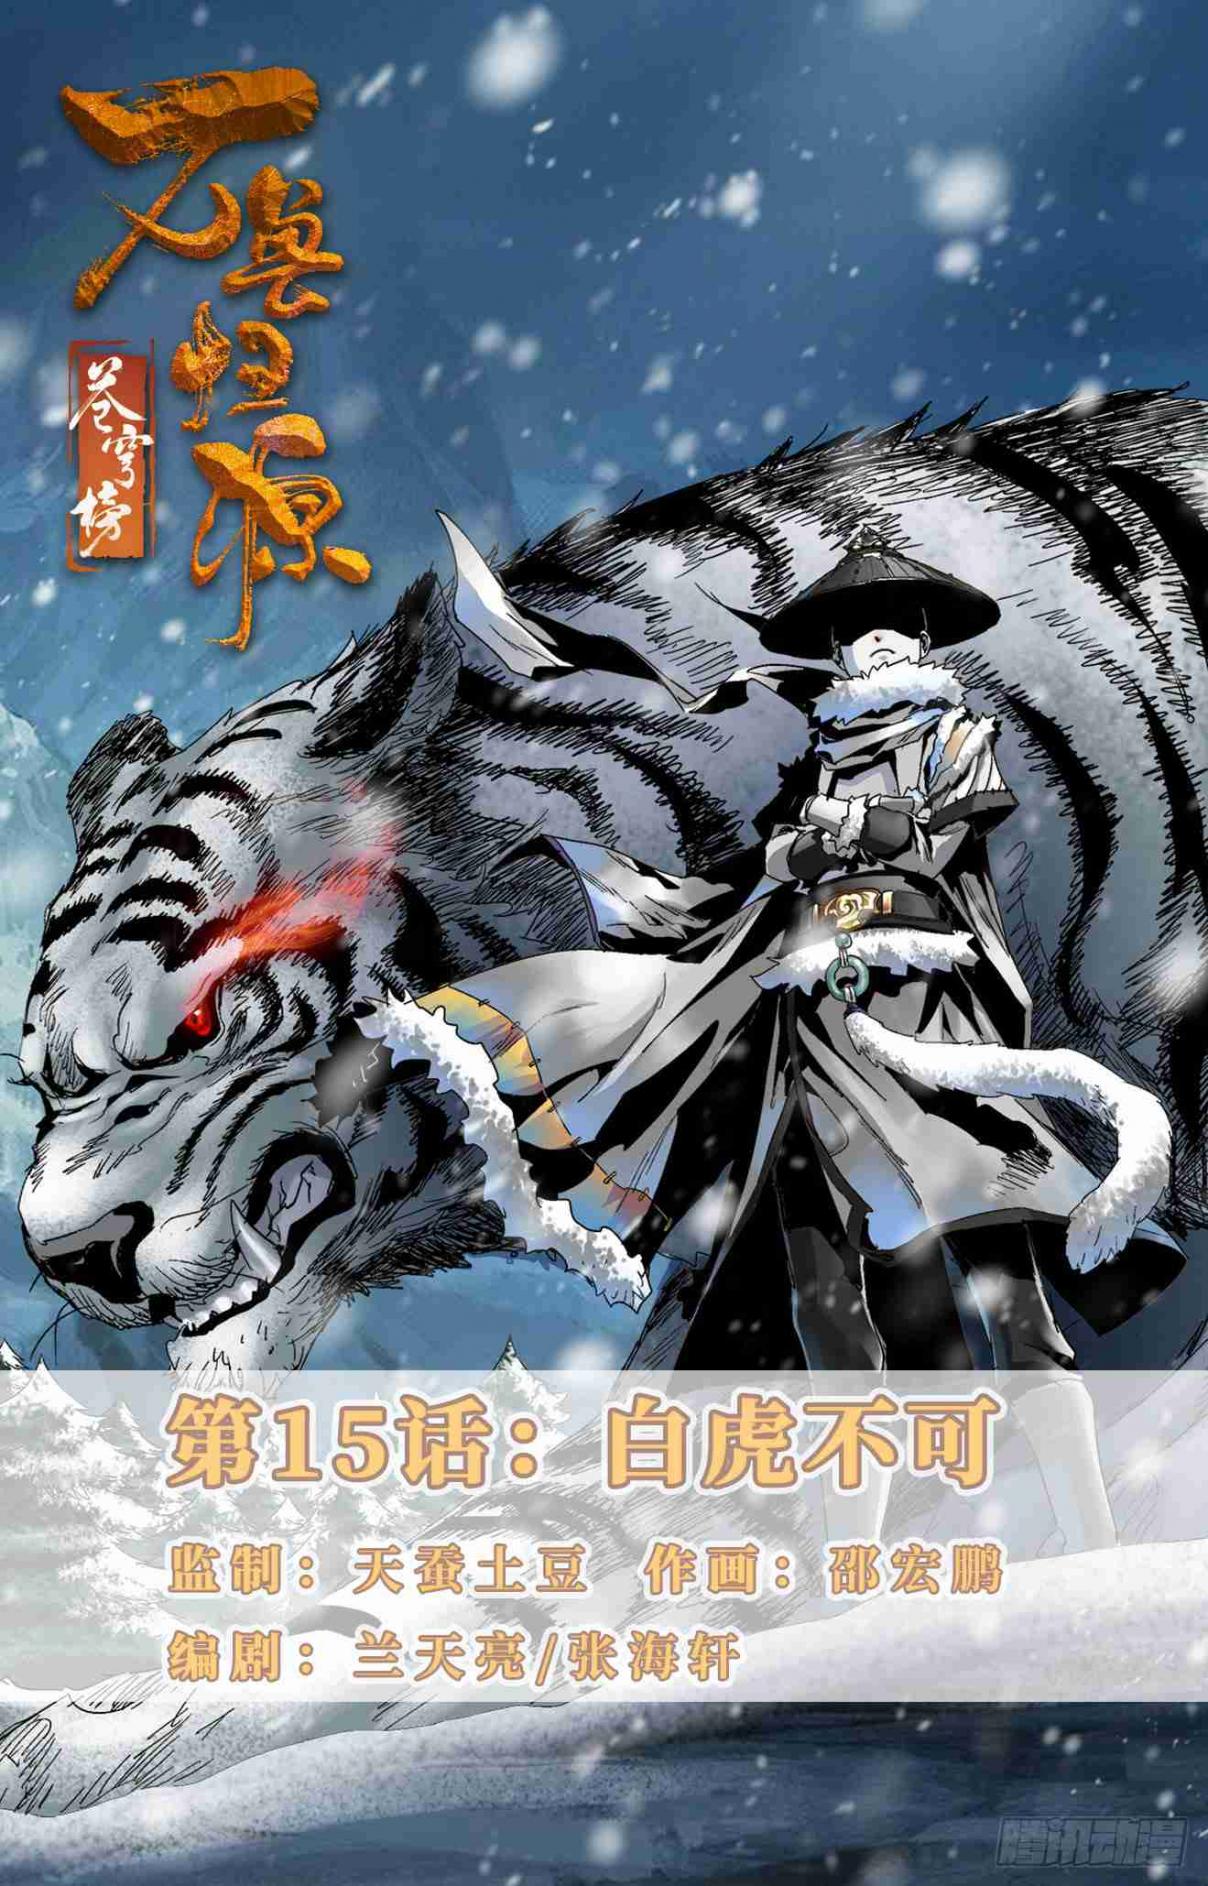 Fights Break Sphere – Return of The Beasts Ch. 15 White Tiger Bu Ke